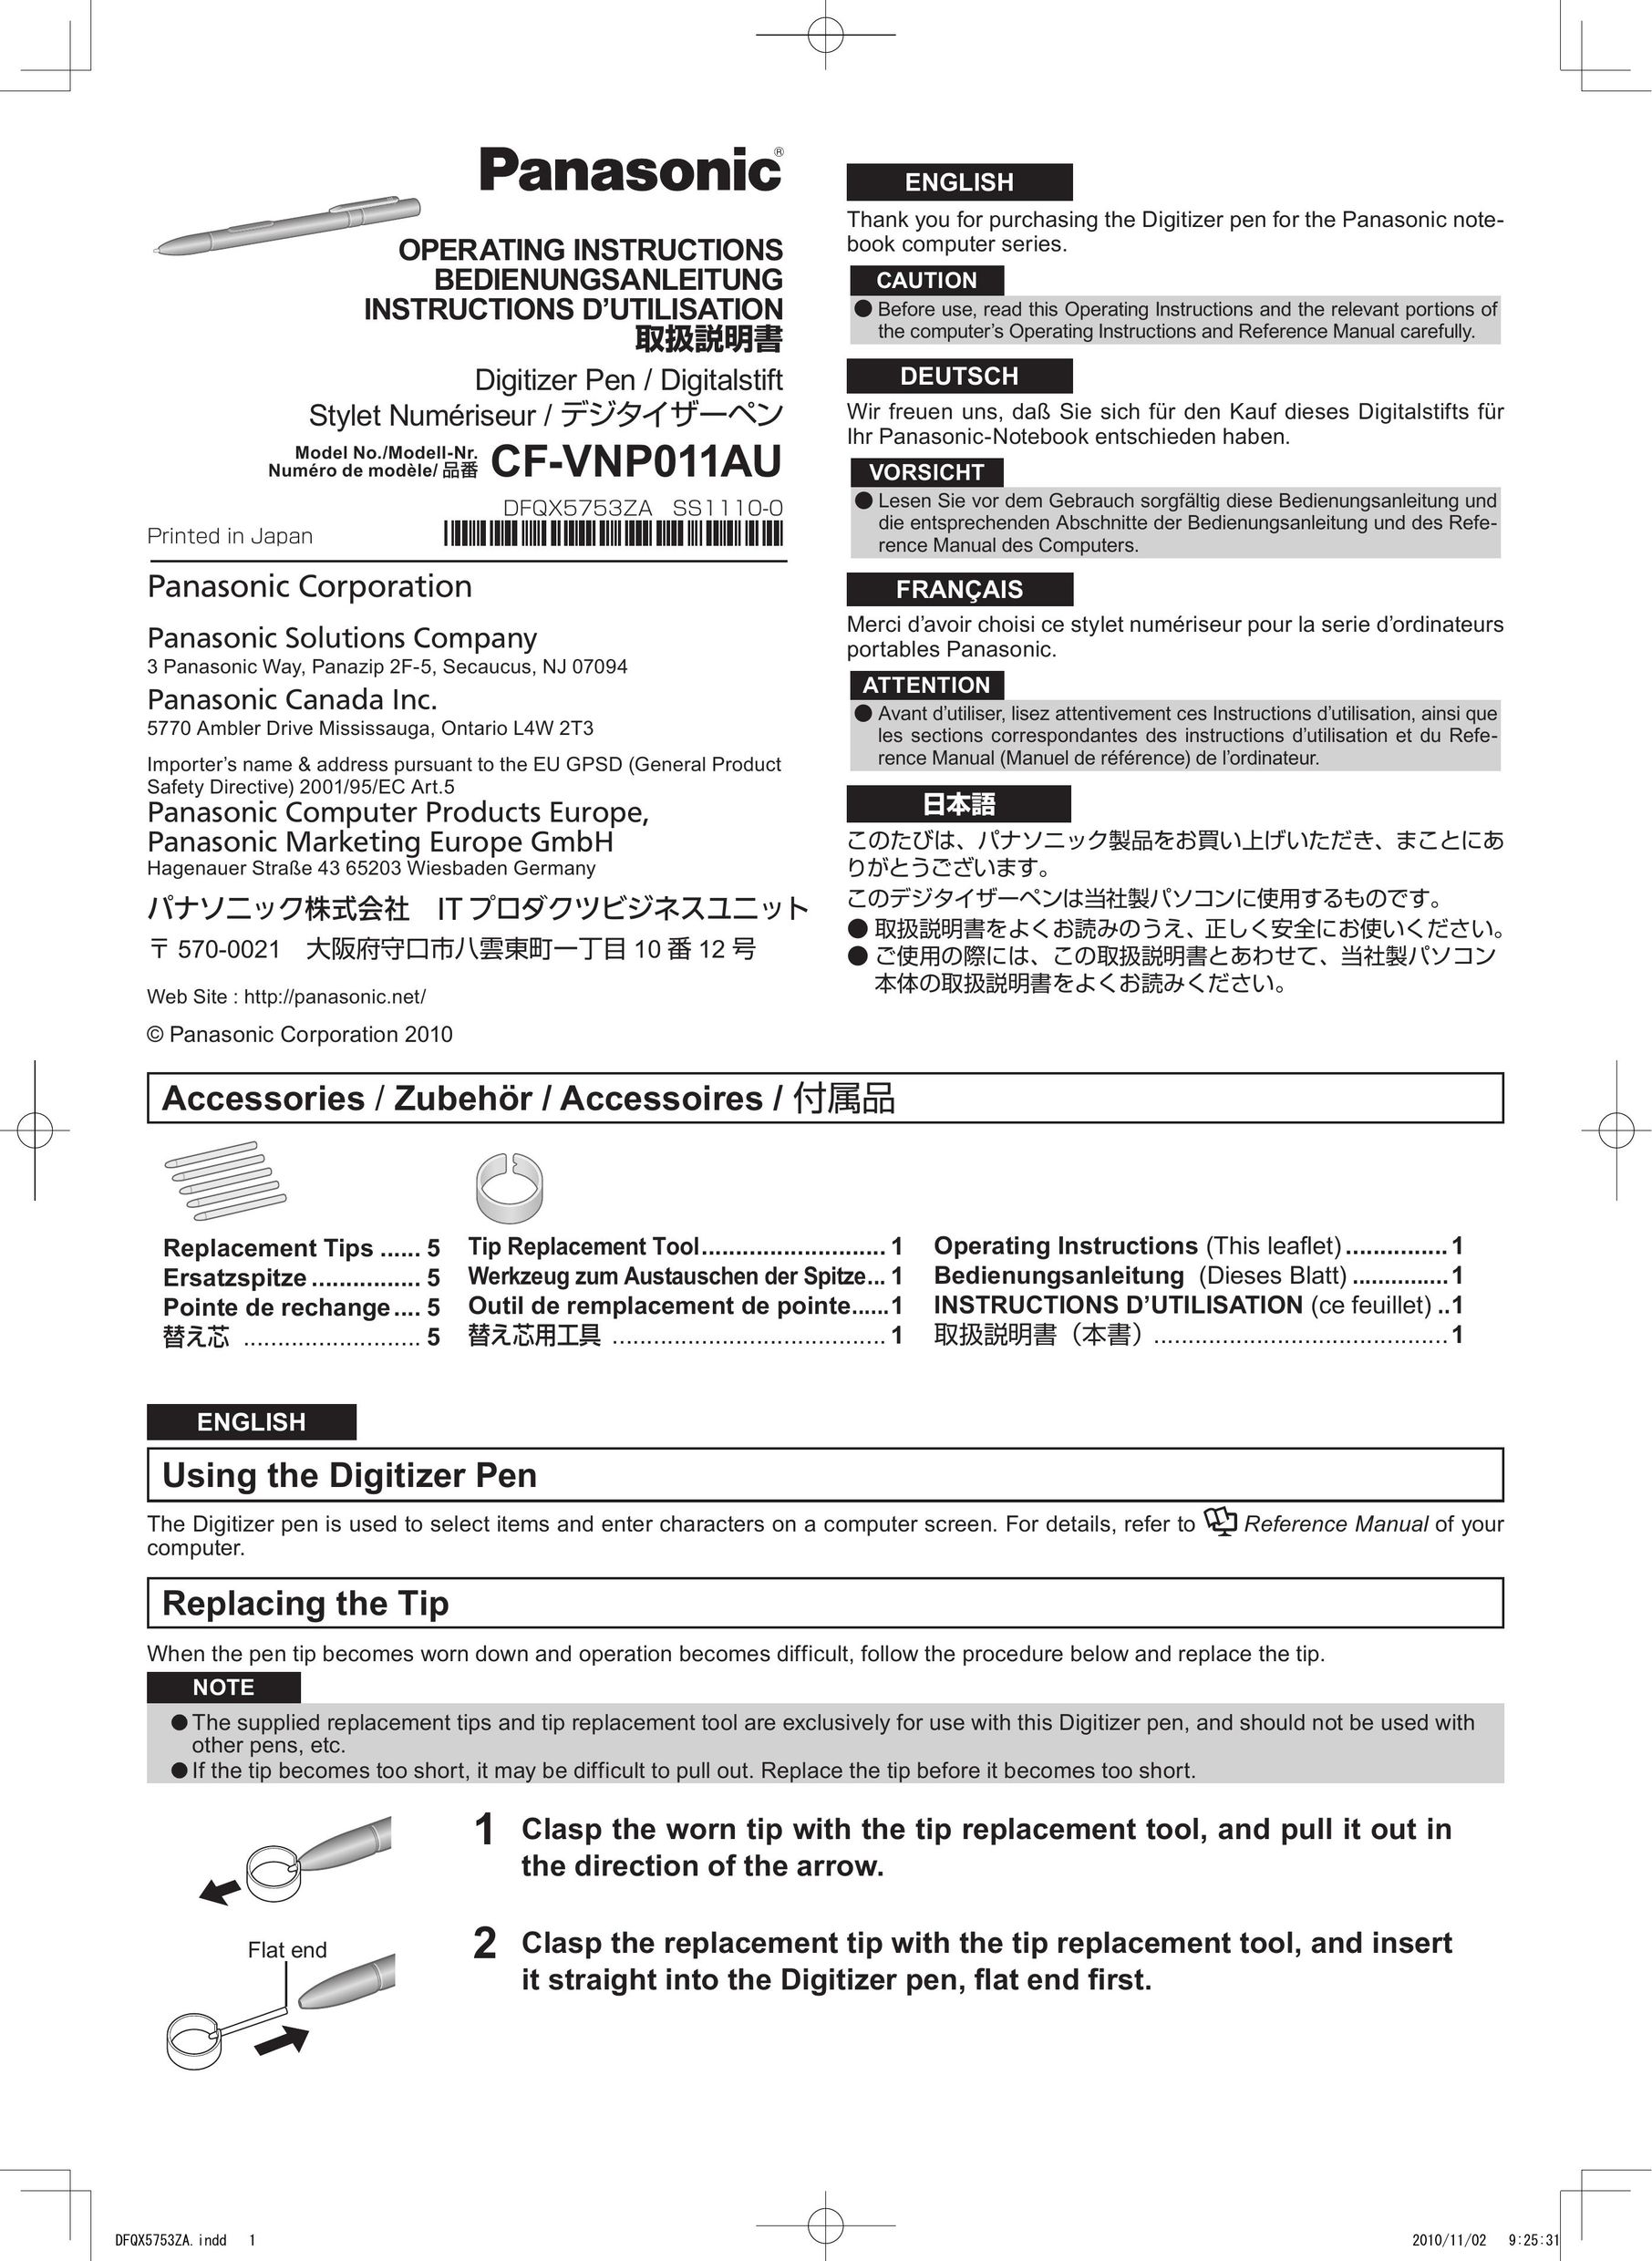 Panasonic CFVNP011U Computer Accessories User Manual